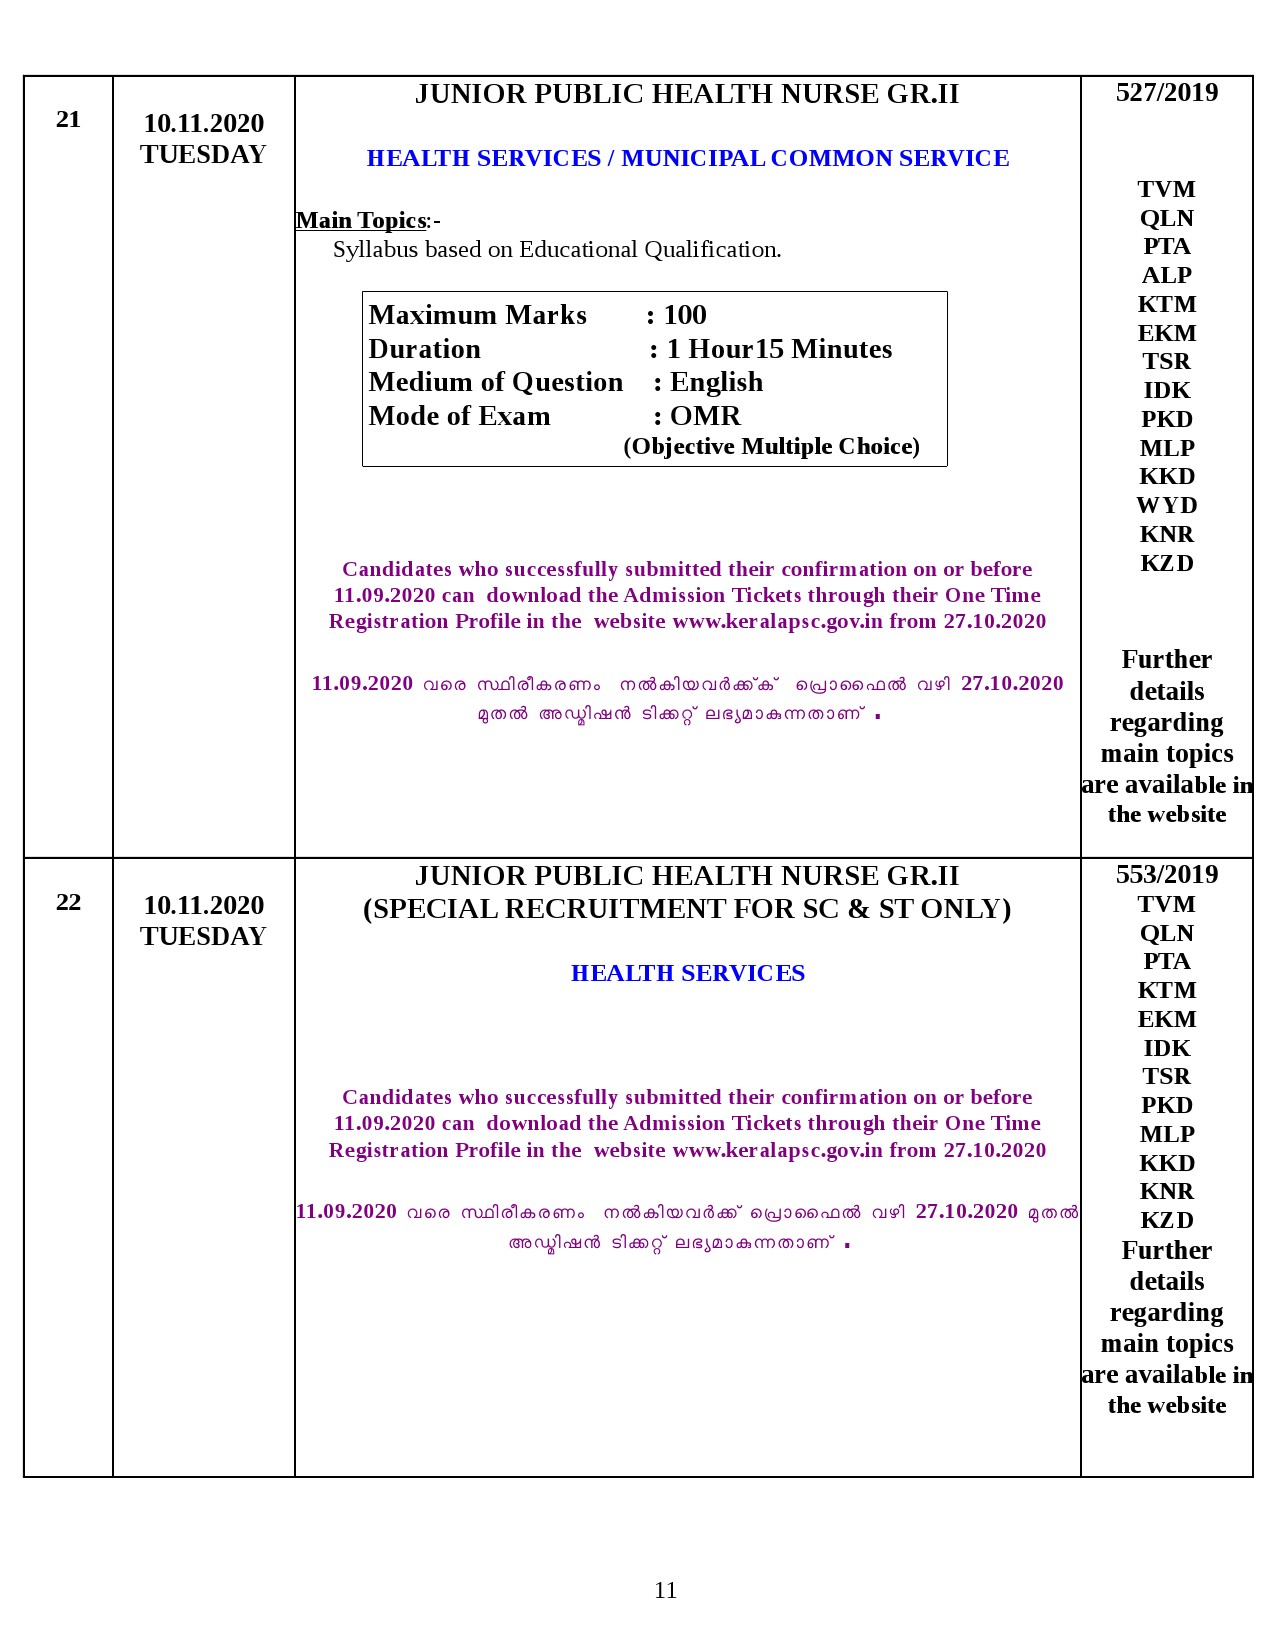 Kerala PSC Final Exam Schedule for November 2020 - Notification Image 11